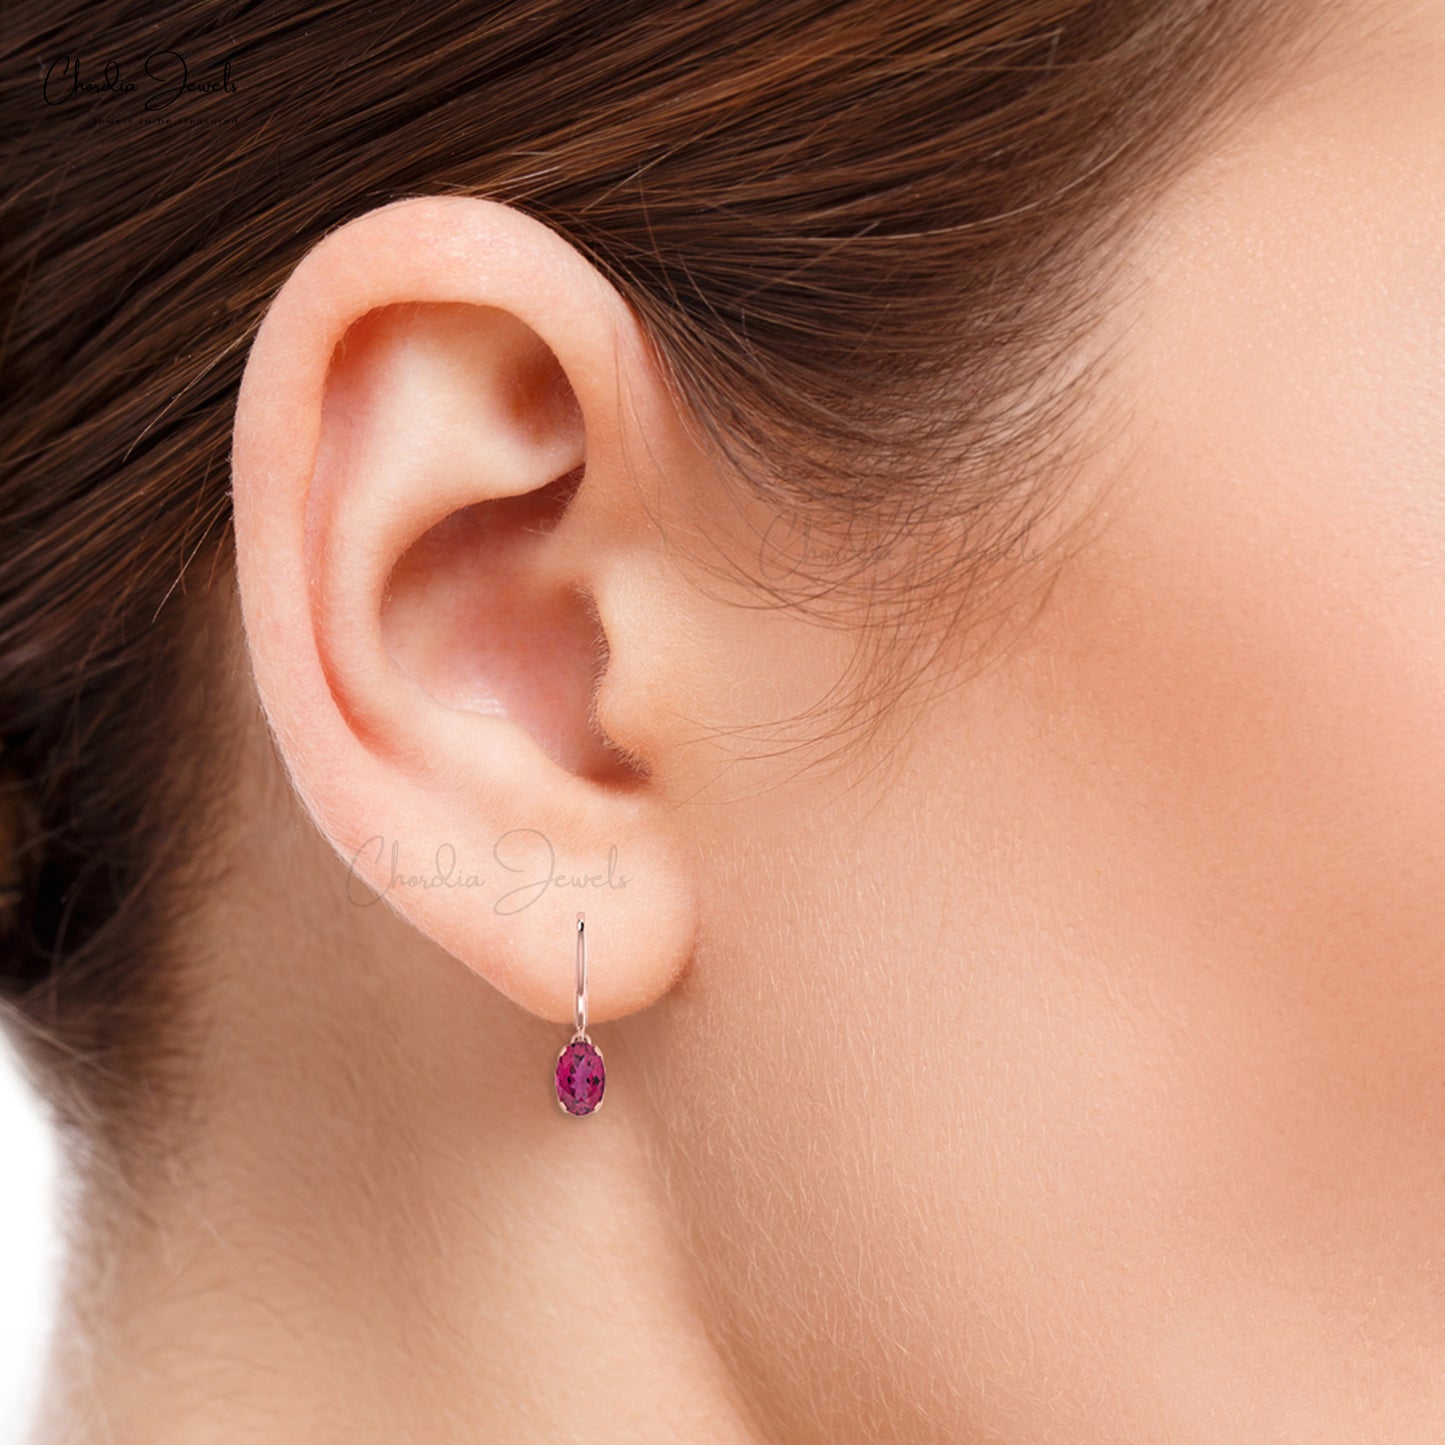 Natural Pink Tourmaline Earrings 6x4mm Oval Cut Gemstone Earrings 14k Solid Gold Dangle Earrings For Anniversary Gift